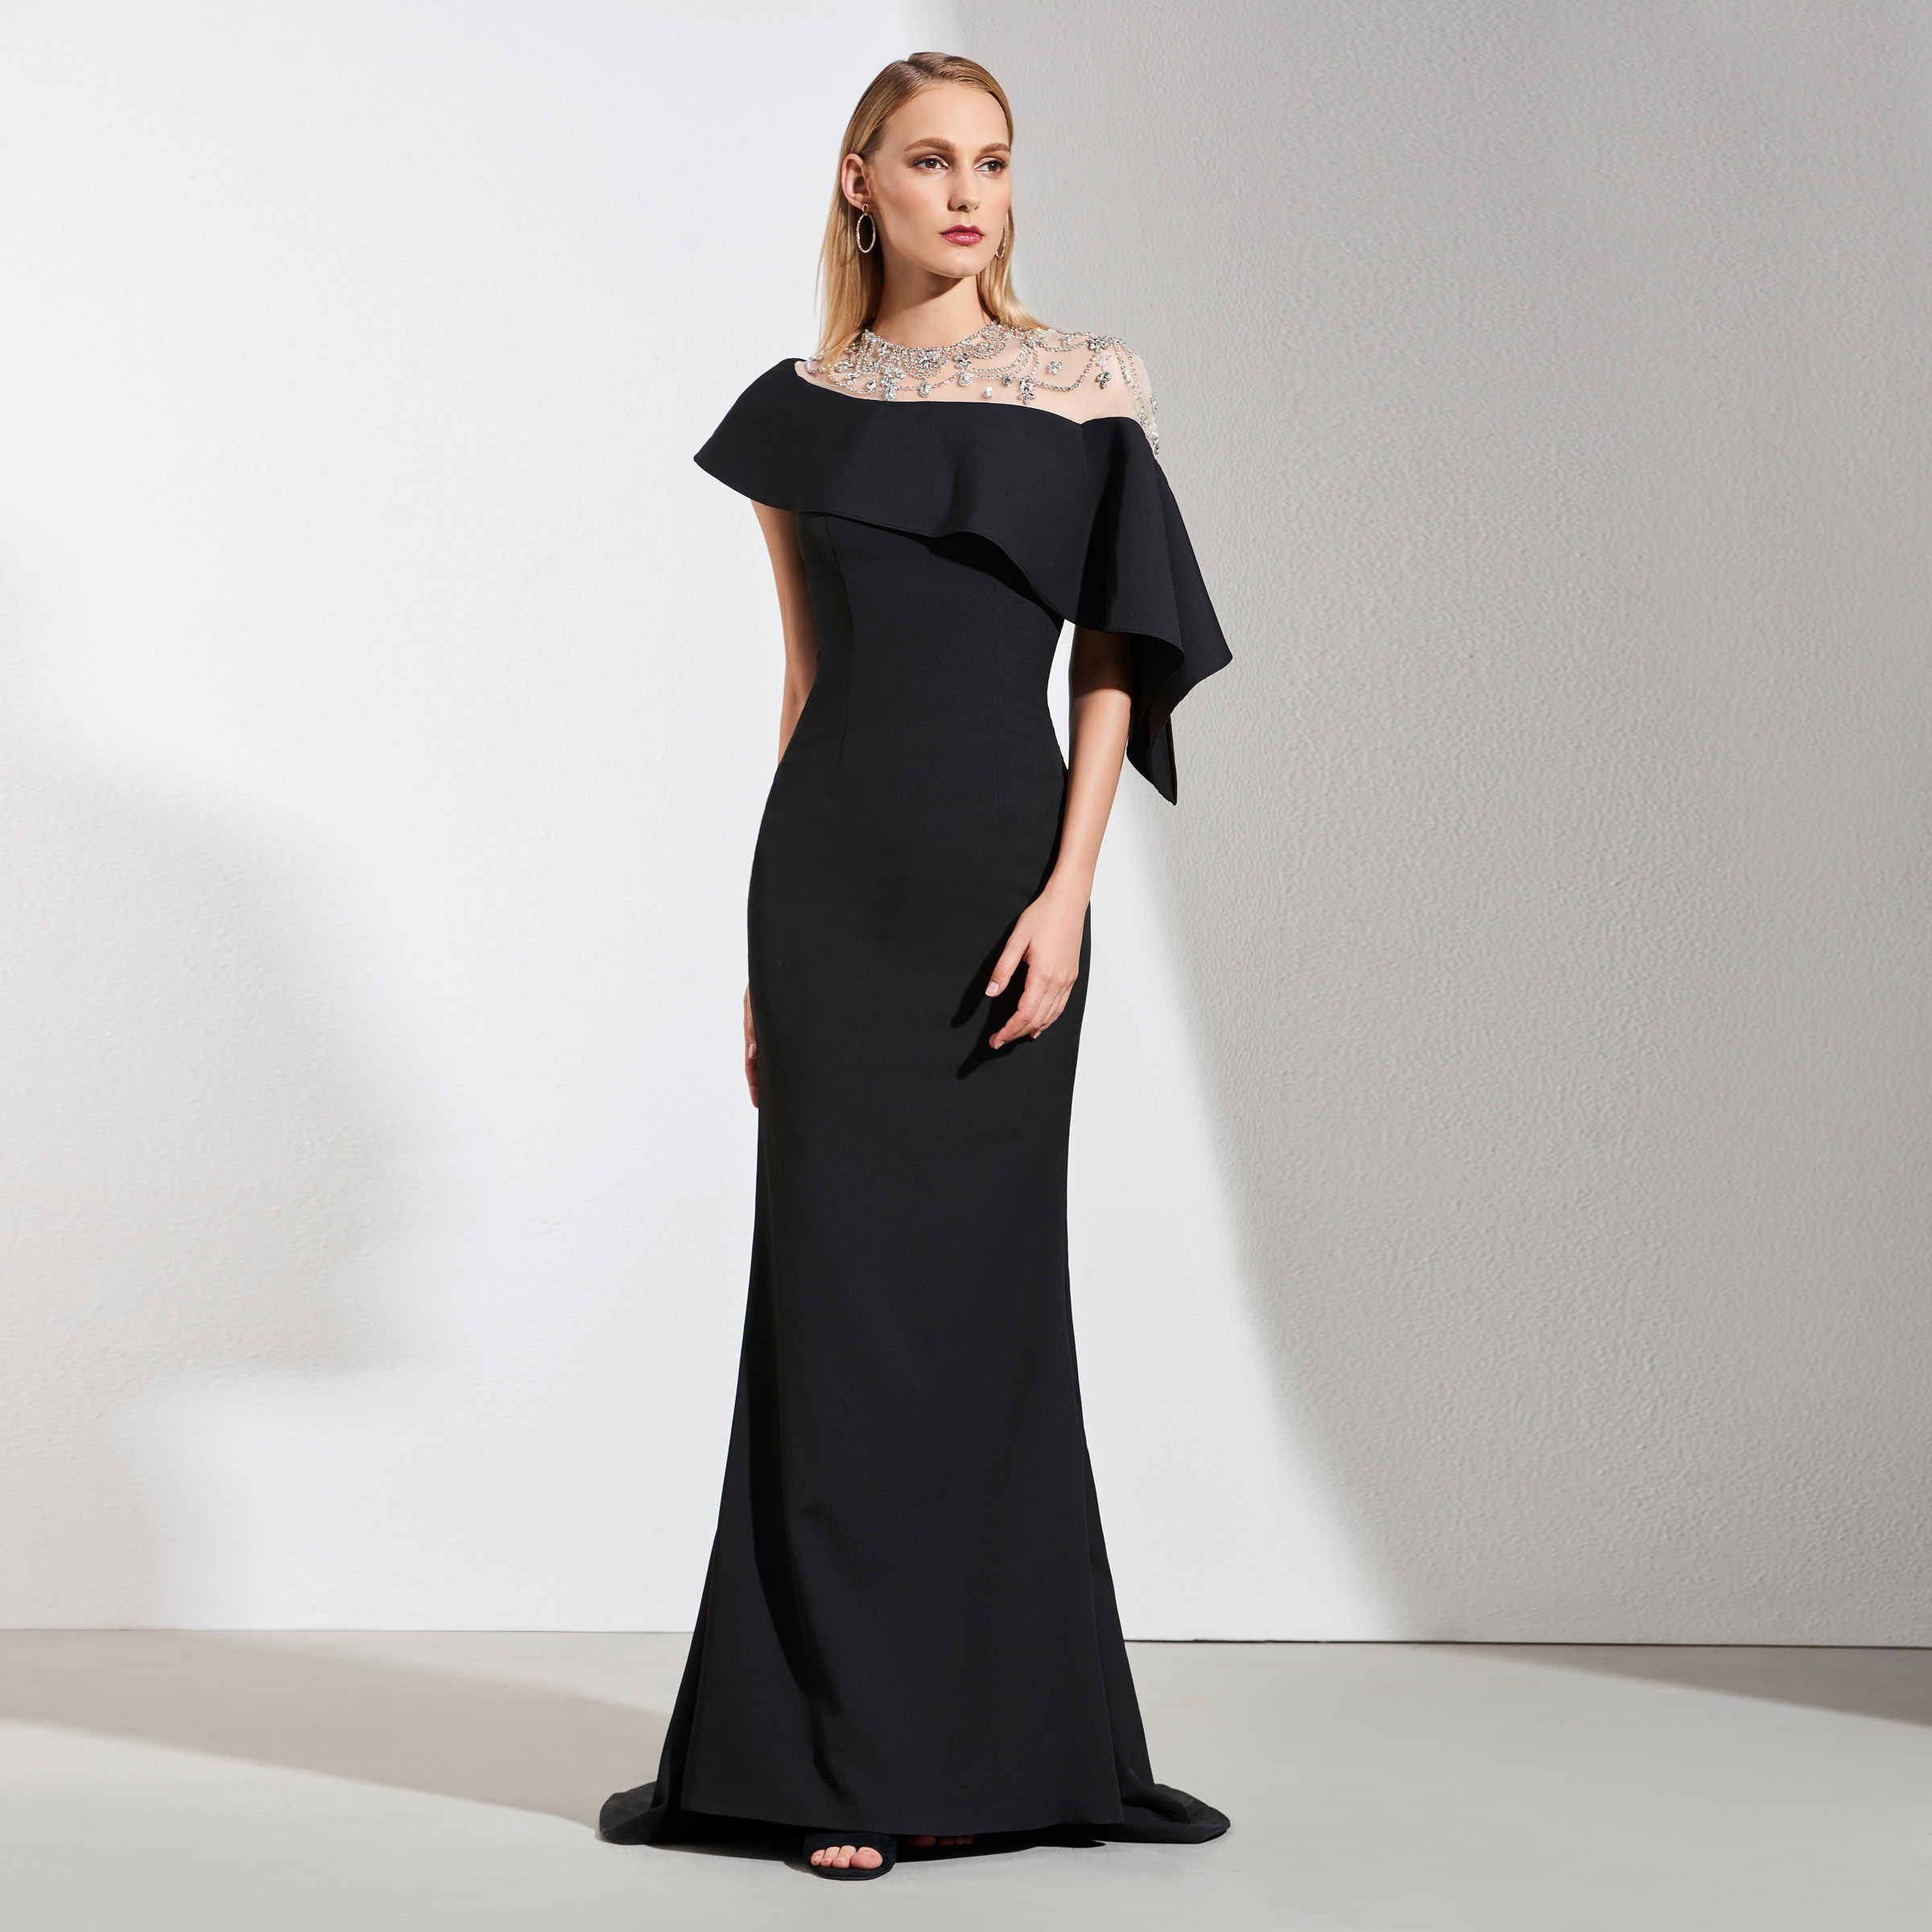 Ericdress Elegant Black Mermaid Black Prom Dress With Beadings